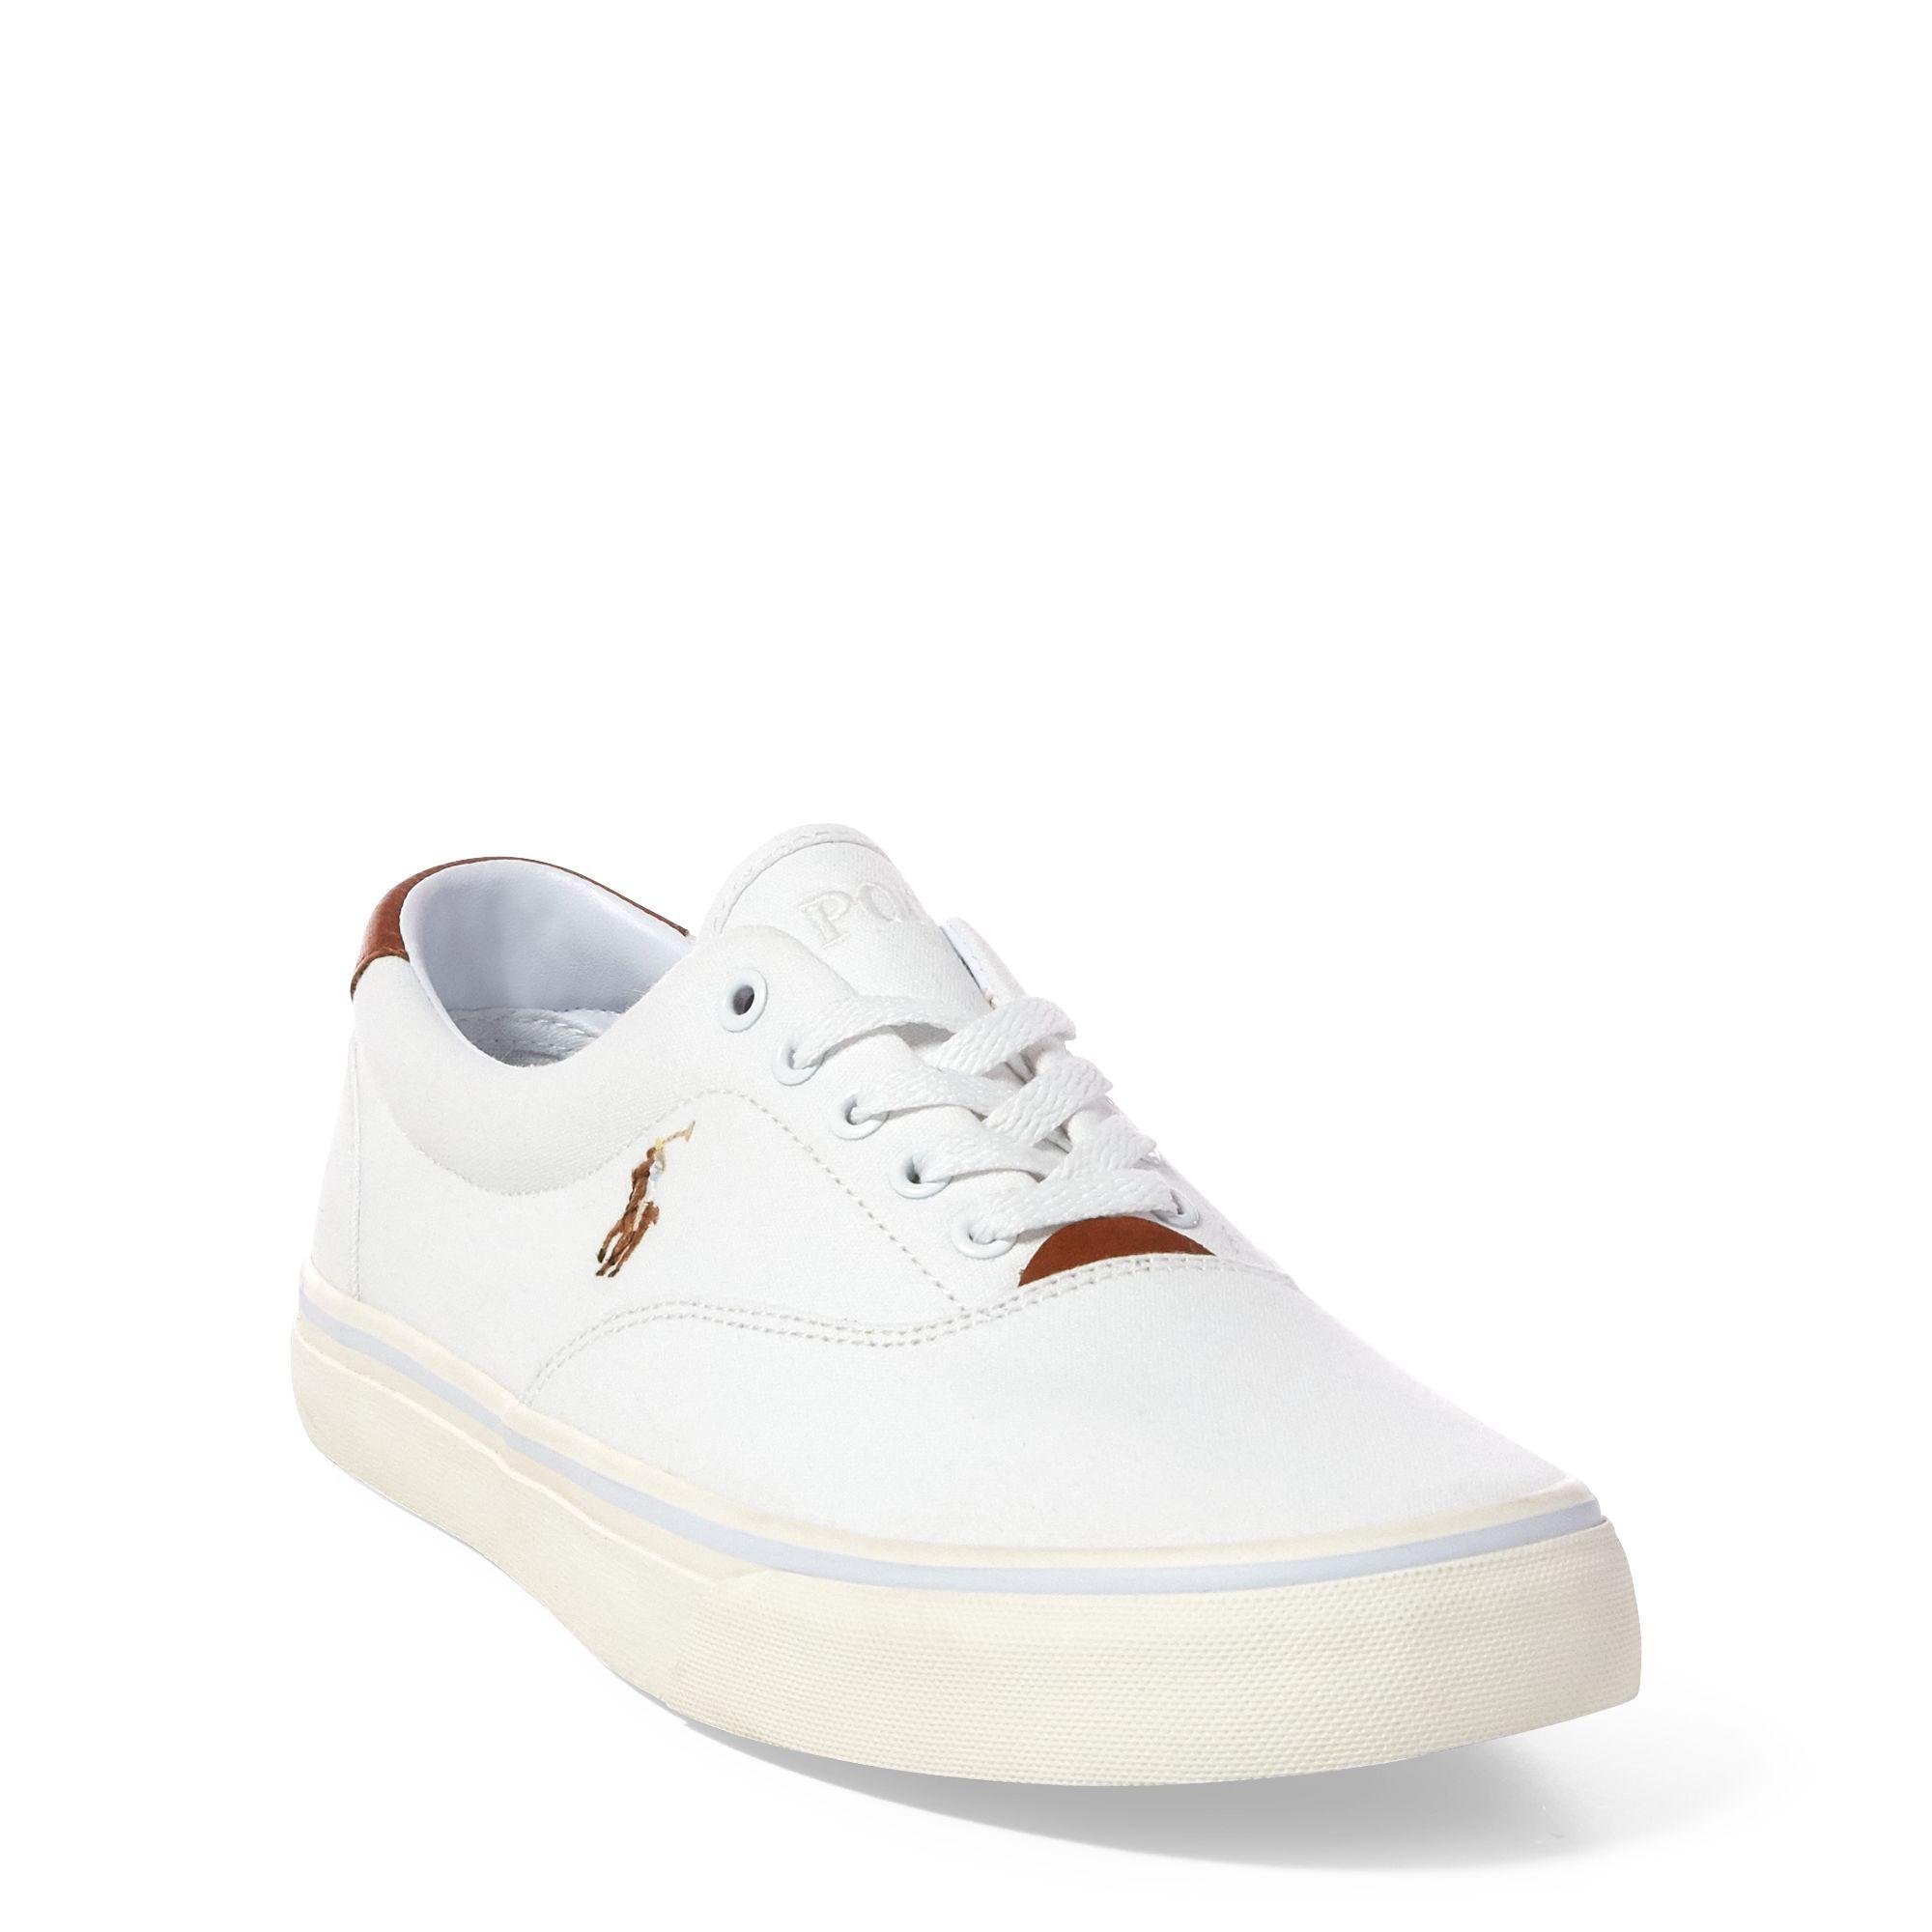 Polo Ralph Lauren Thorton Canvas Low-top Sneaker in White for Men - Lyst